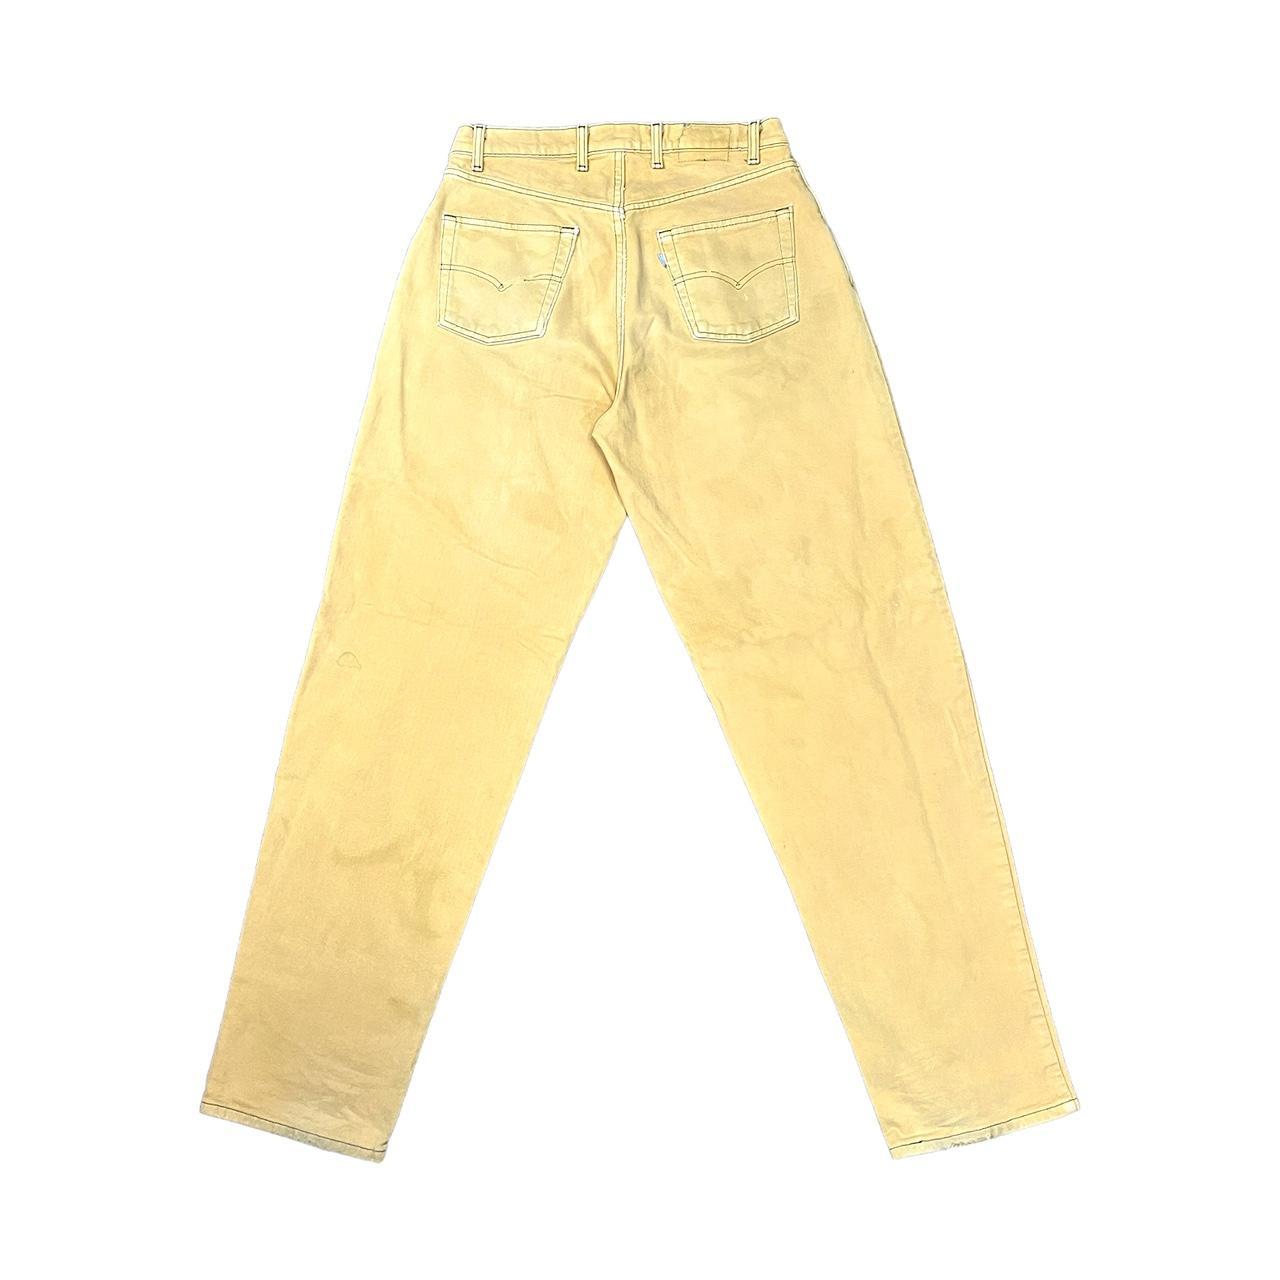 Levi’s Silvertab yellow baggy jeans, size 32x34.... - Depop